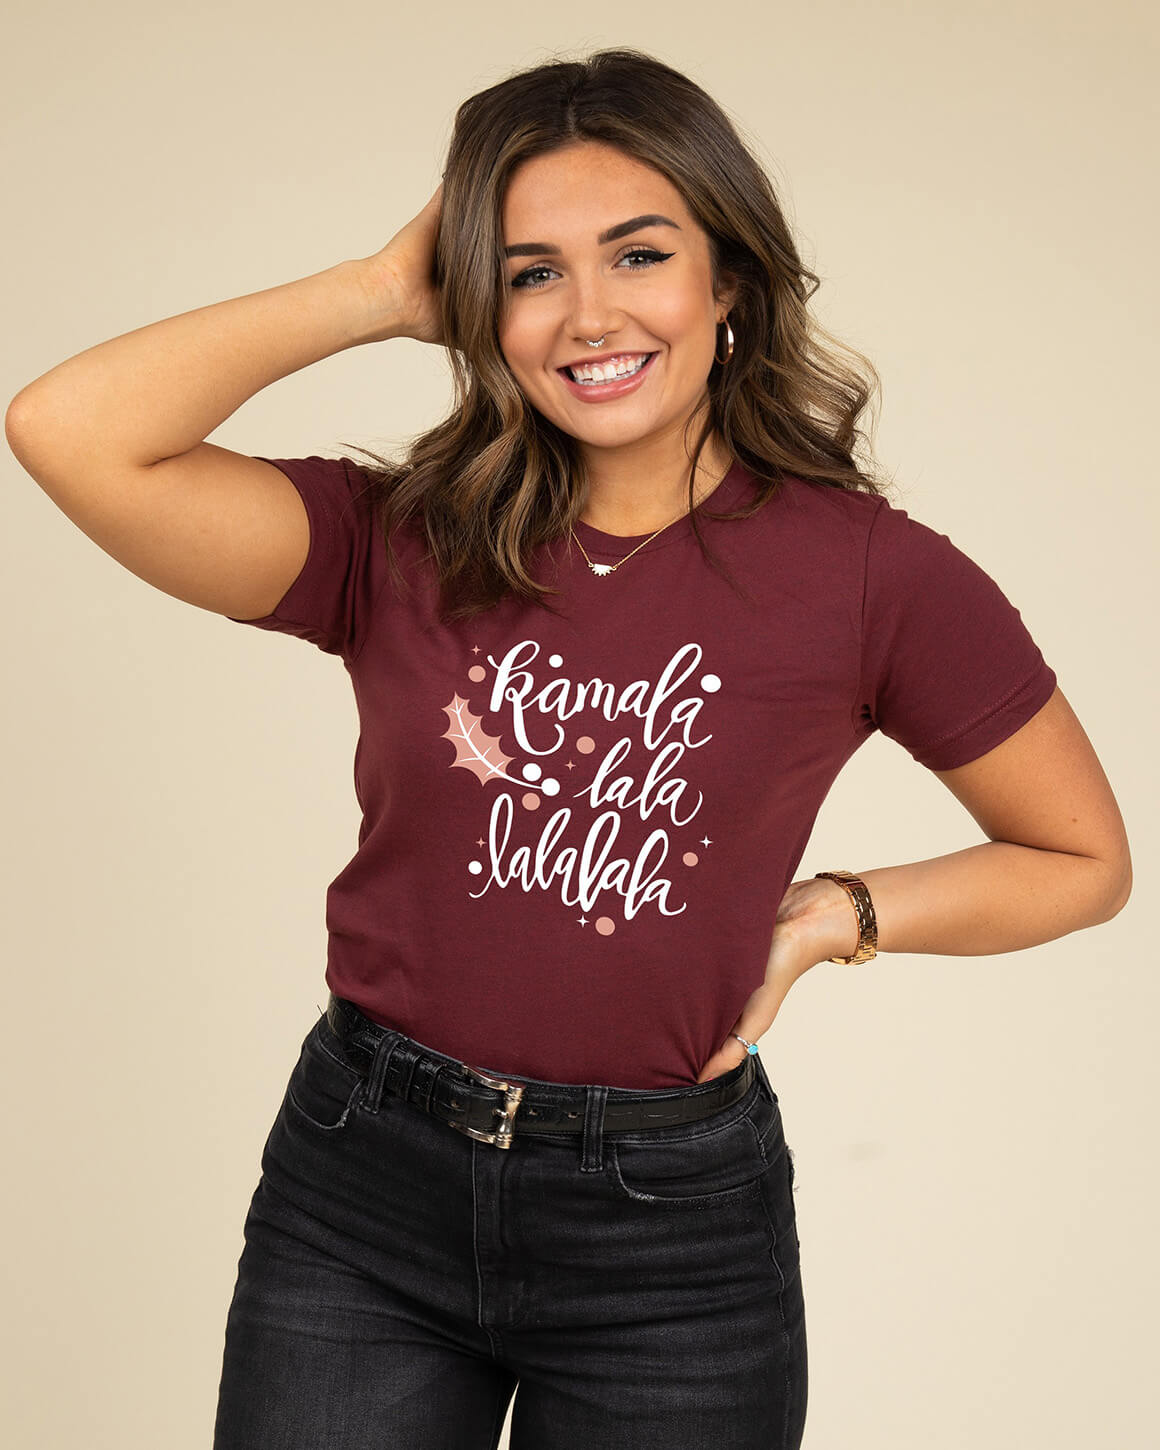 Kamala lala lalala Christmas shirt in maroon for feminists